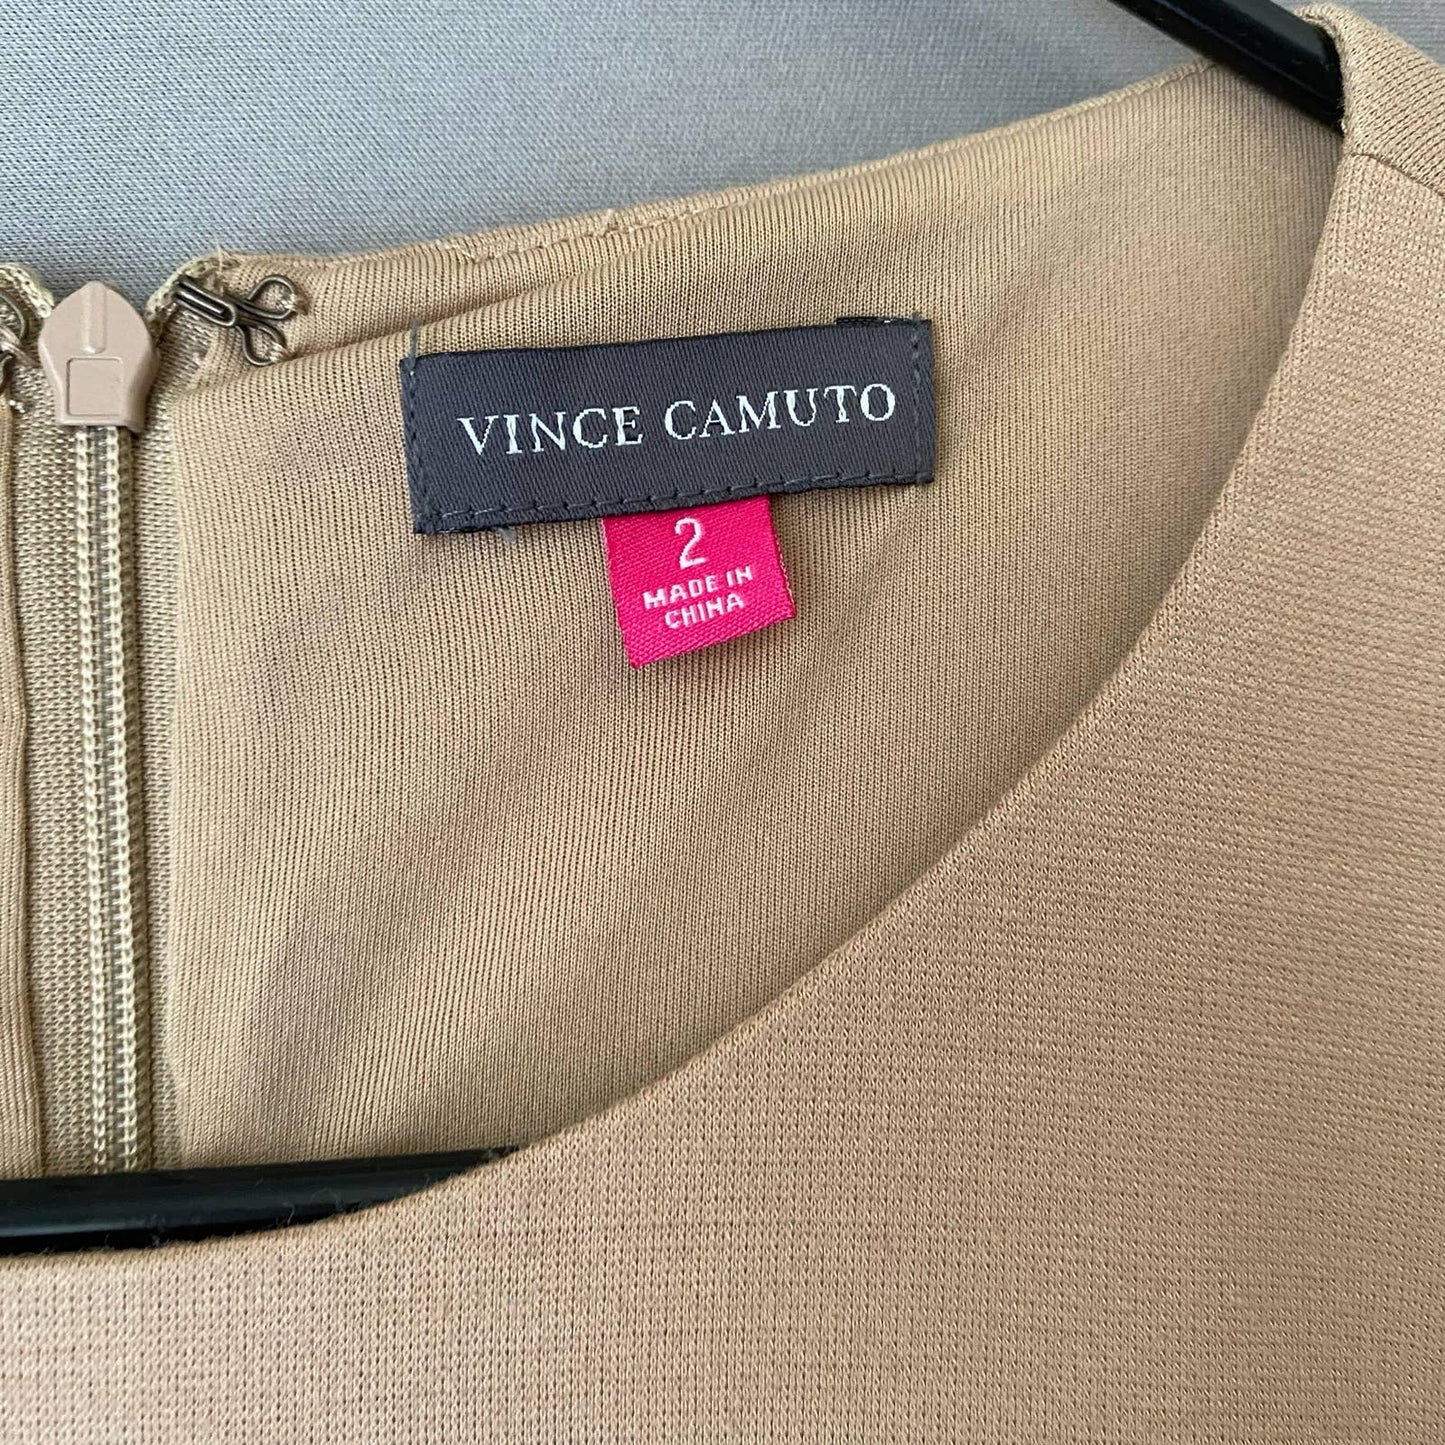 Vince Camuto sz 2 block color mini dress NWT